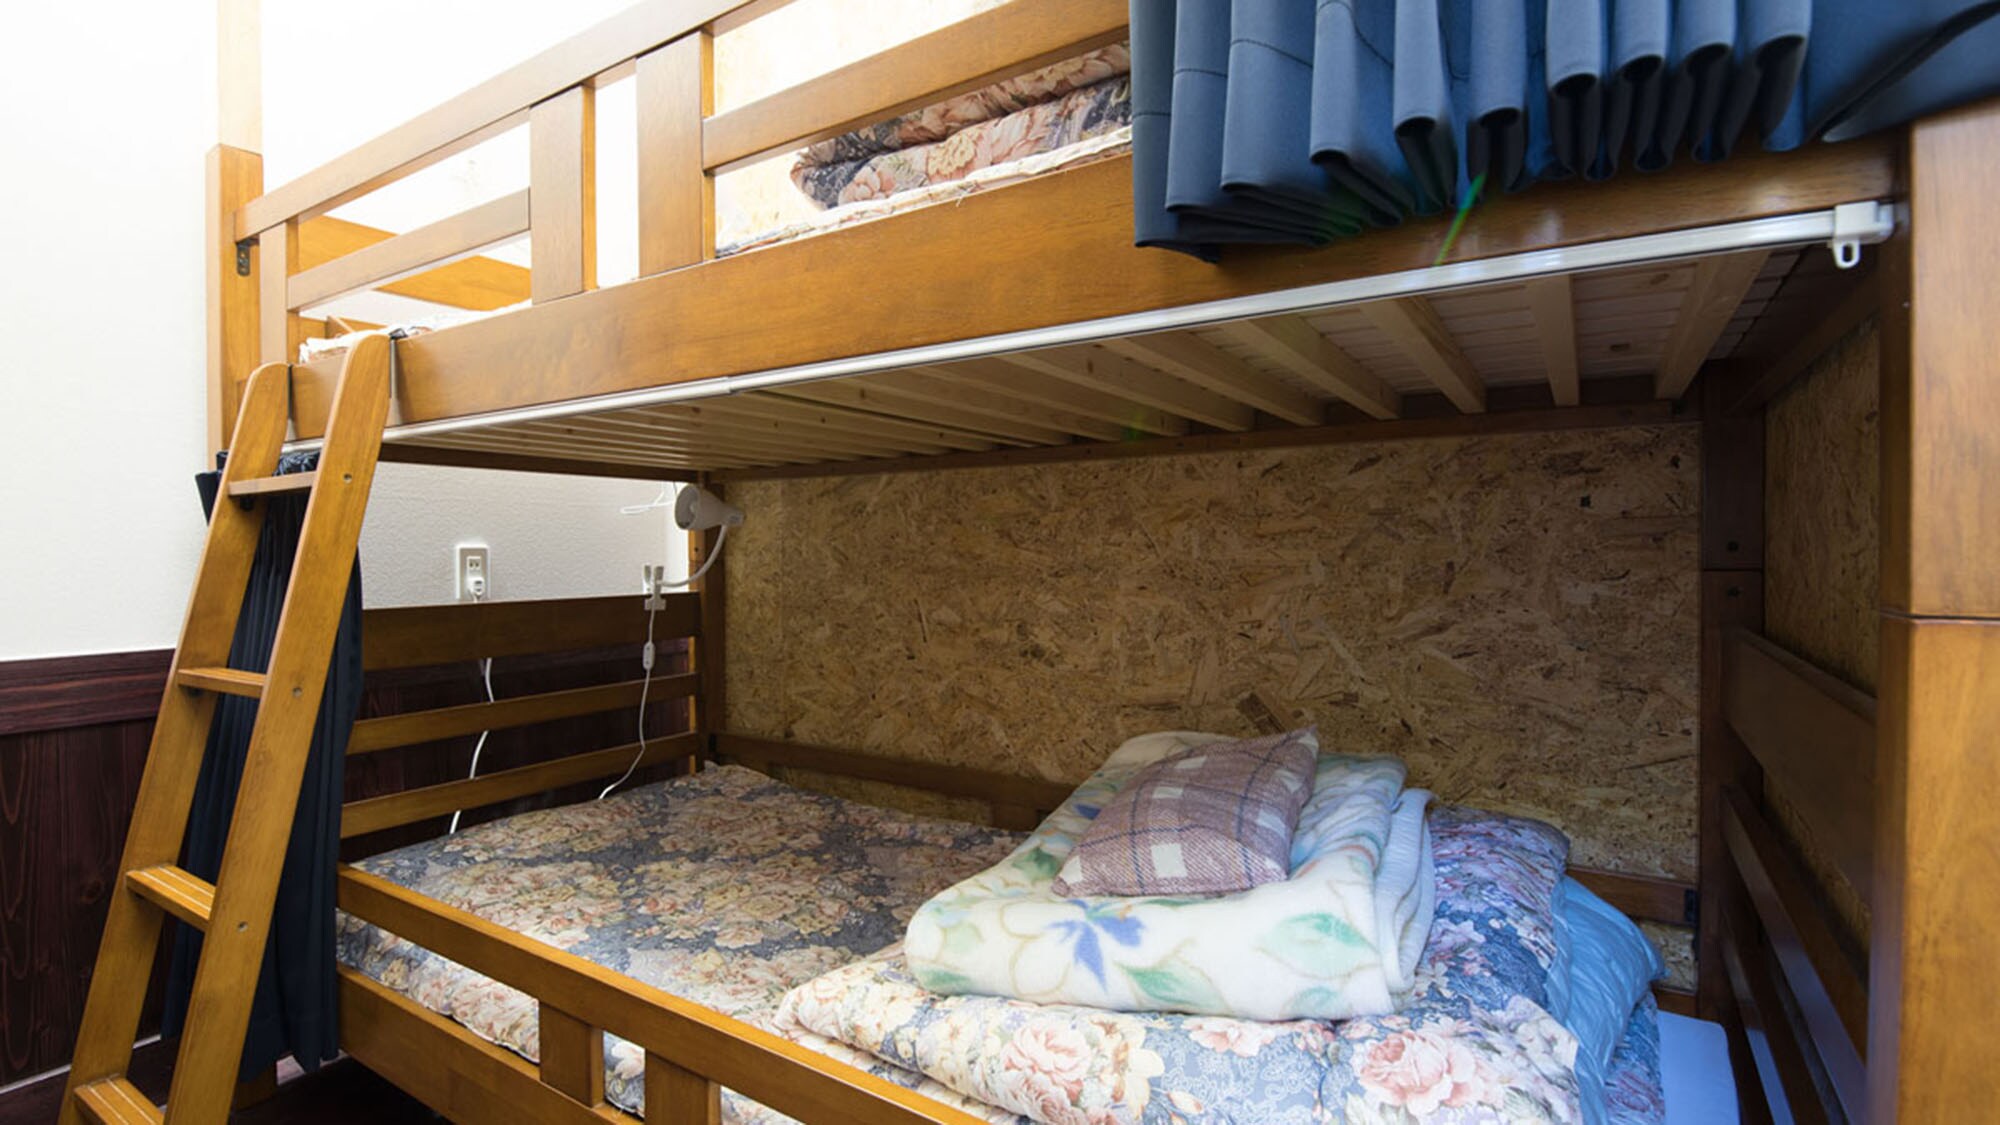 Tempat tidur susun dengan futon asrama juga tersedia.